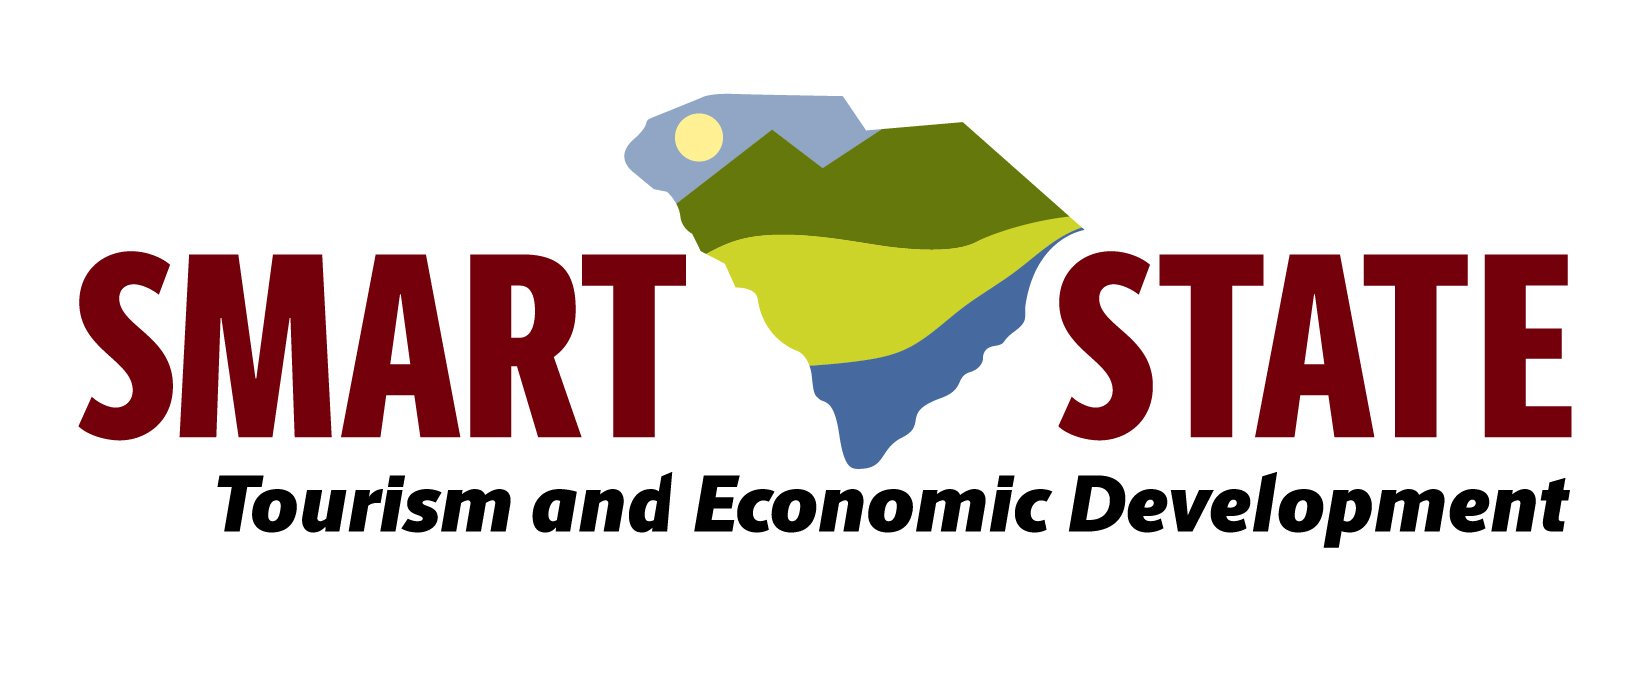 SmartState图形显示了南卡罗来纳州的山麓、山前、中部和低地地区的不同颜色。图表上写着:智能州旅游和经济发展